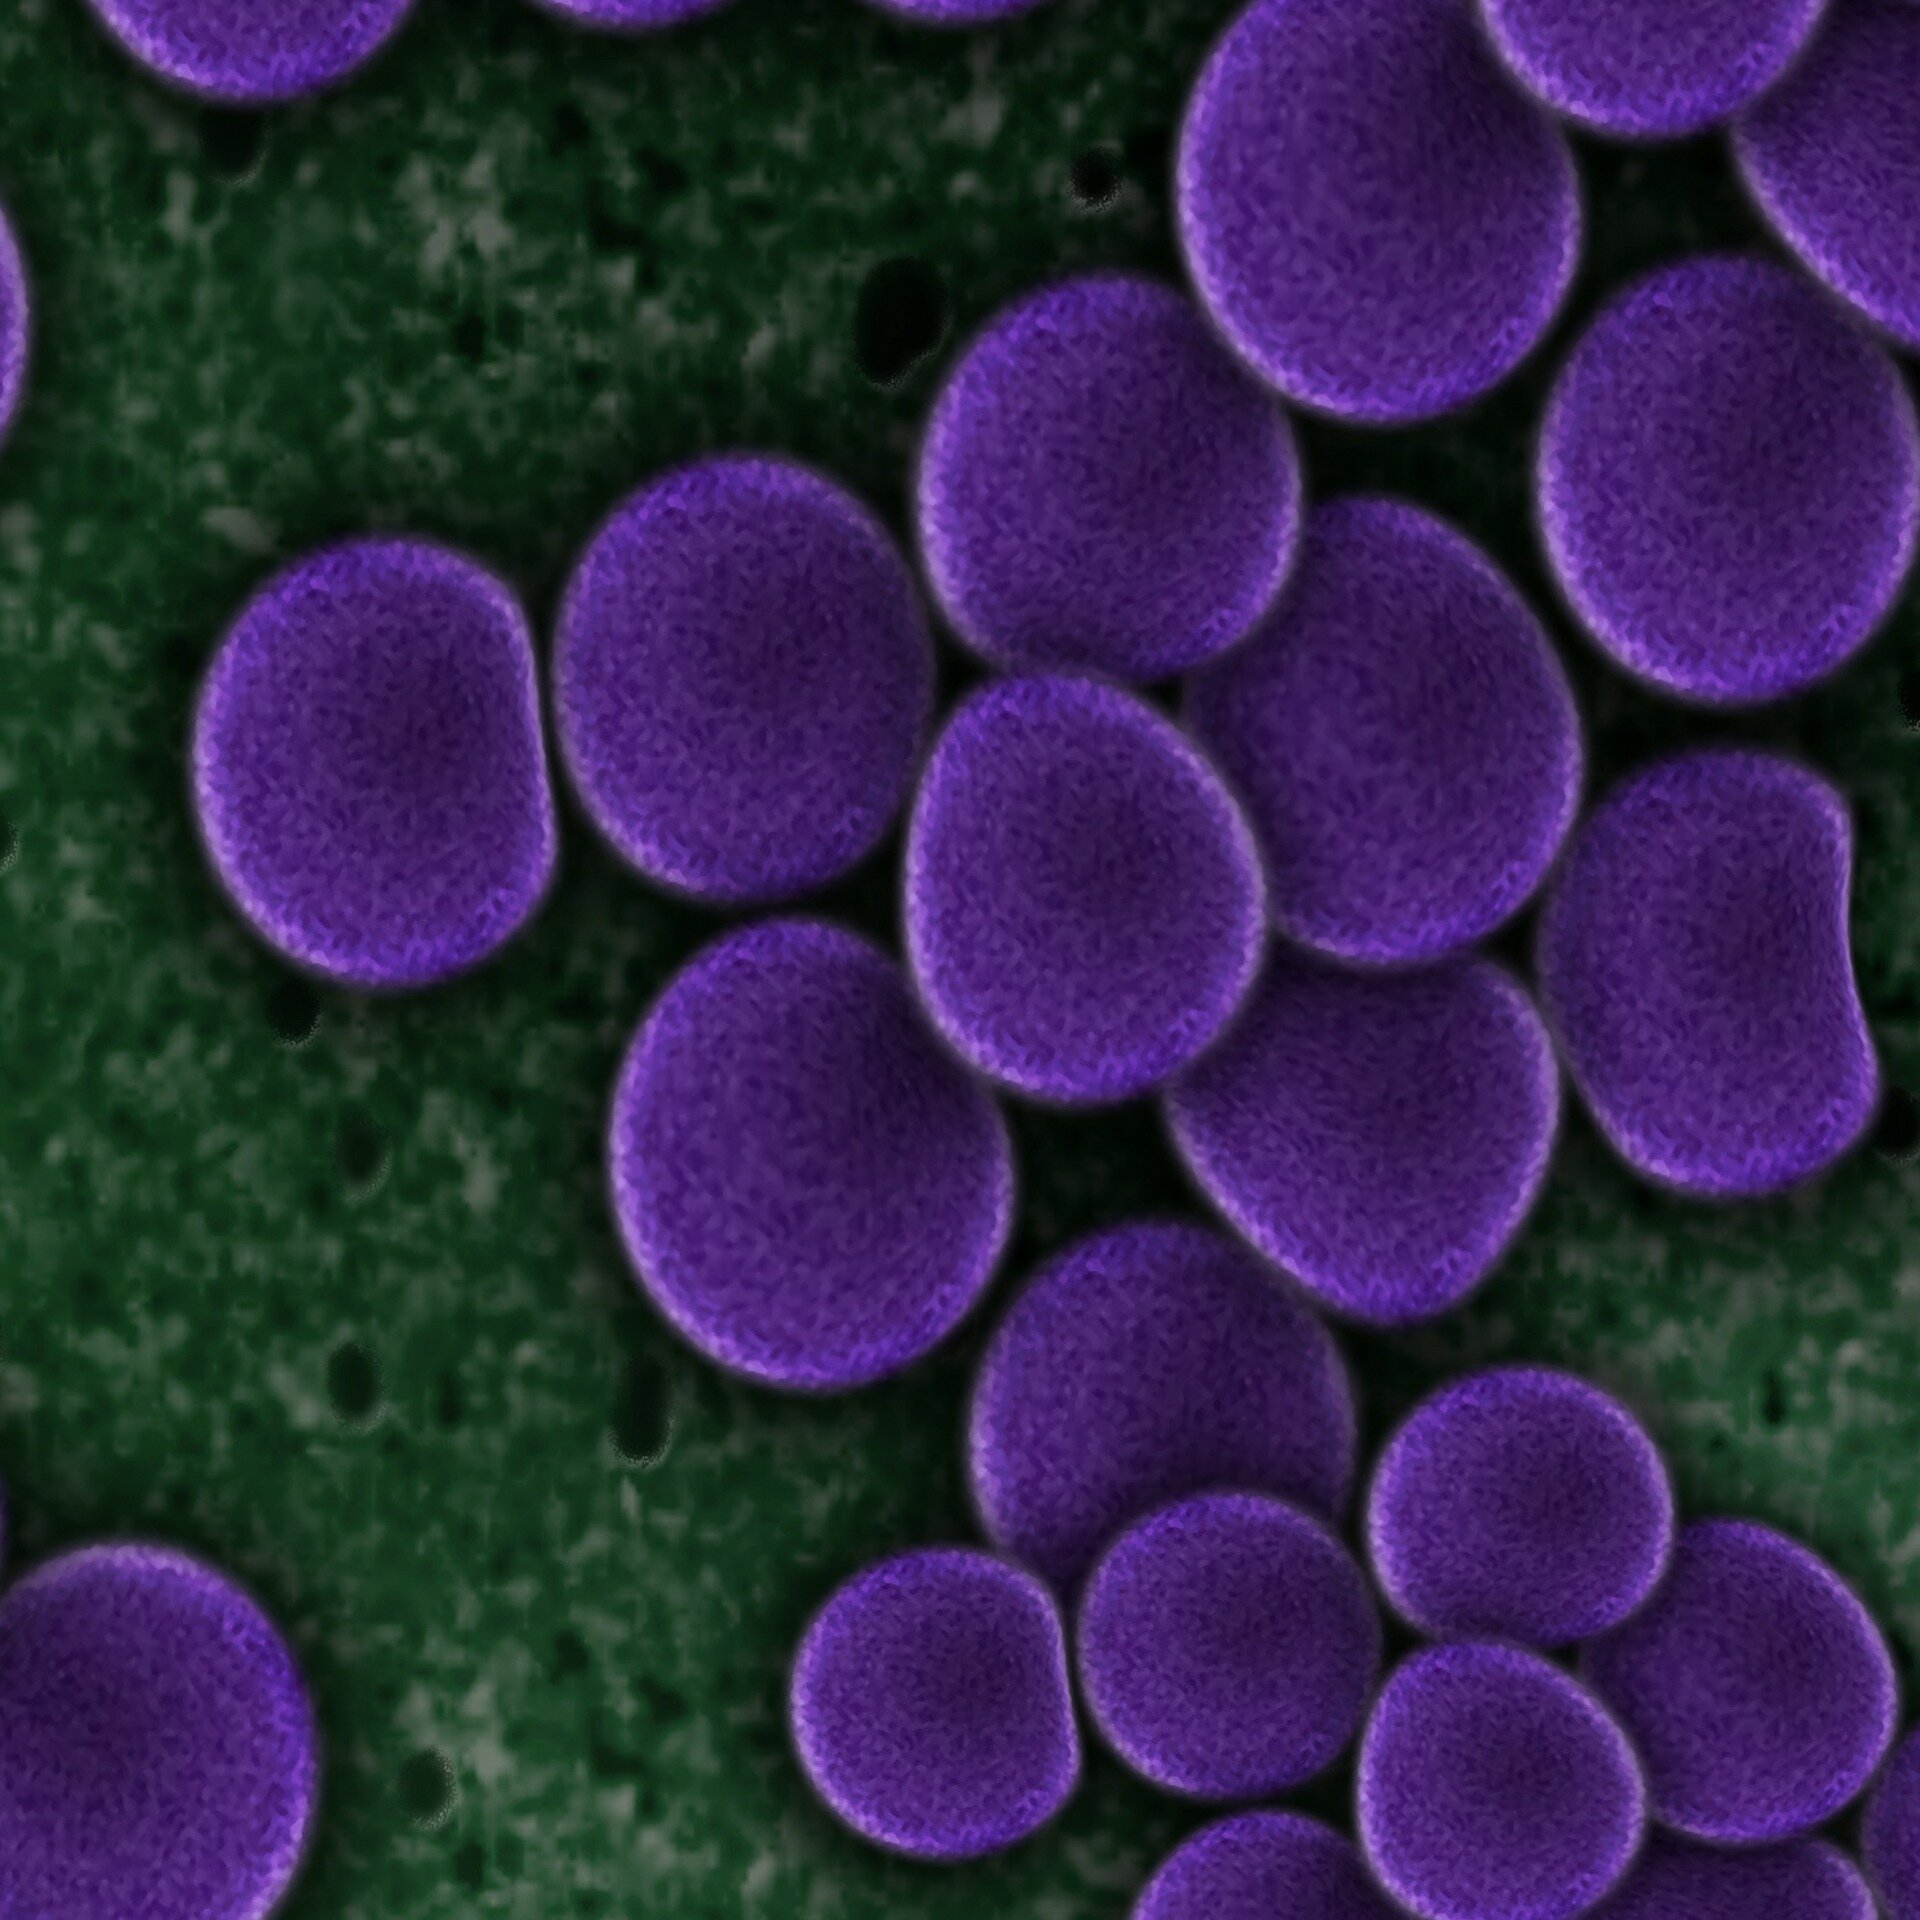 #Meet Clostridium butyricum—the bacteria that helps keep us feeling our best